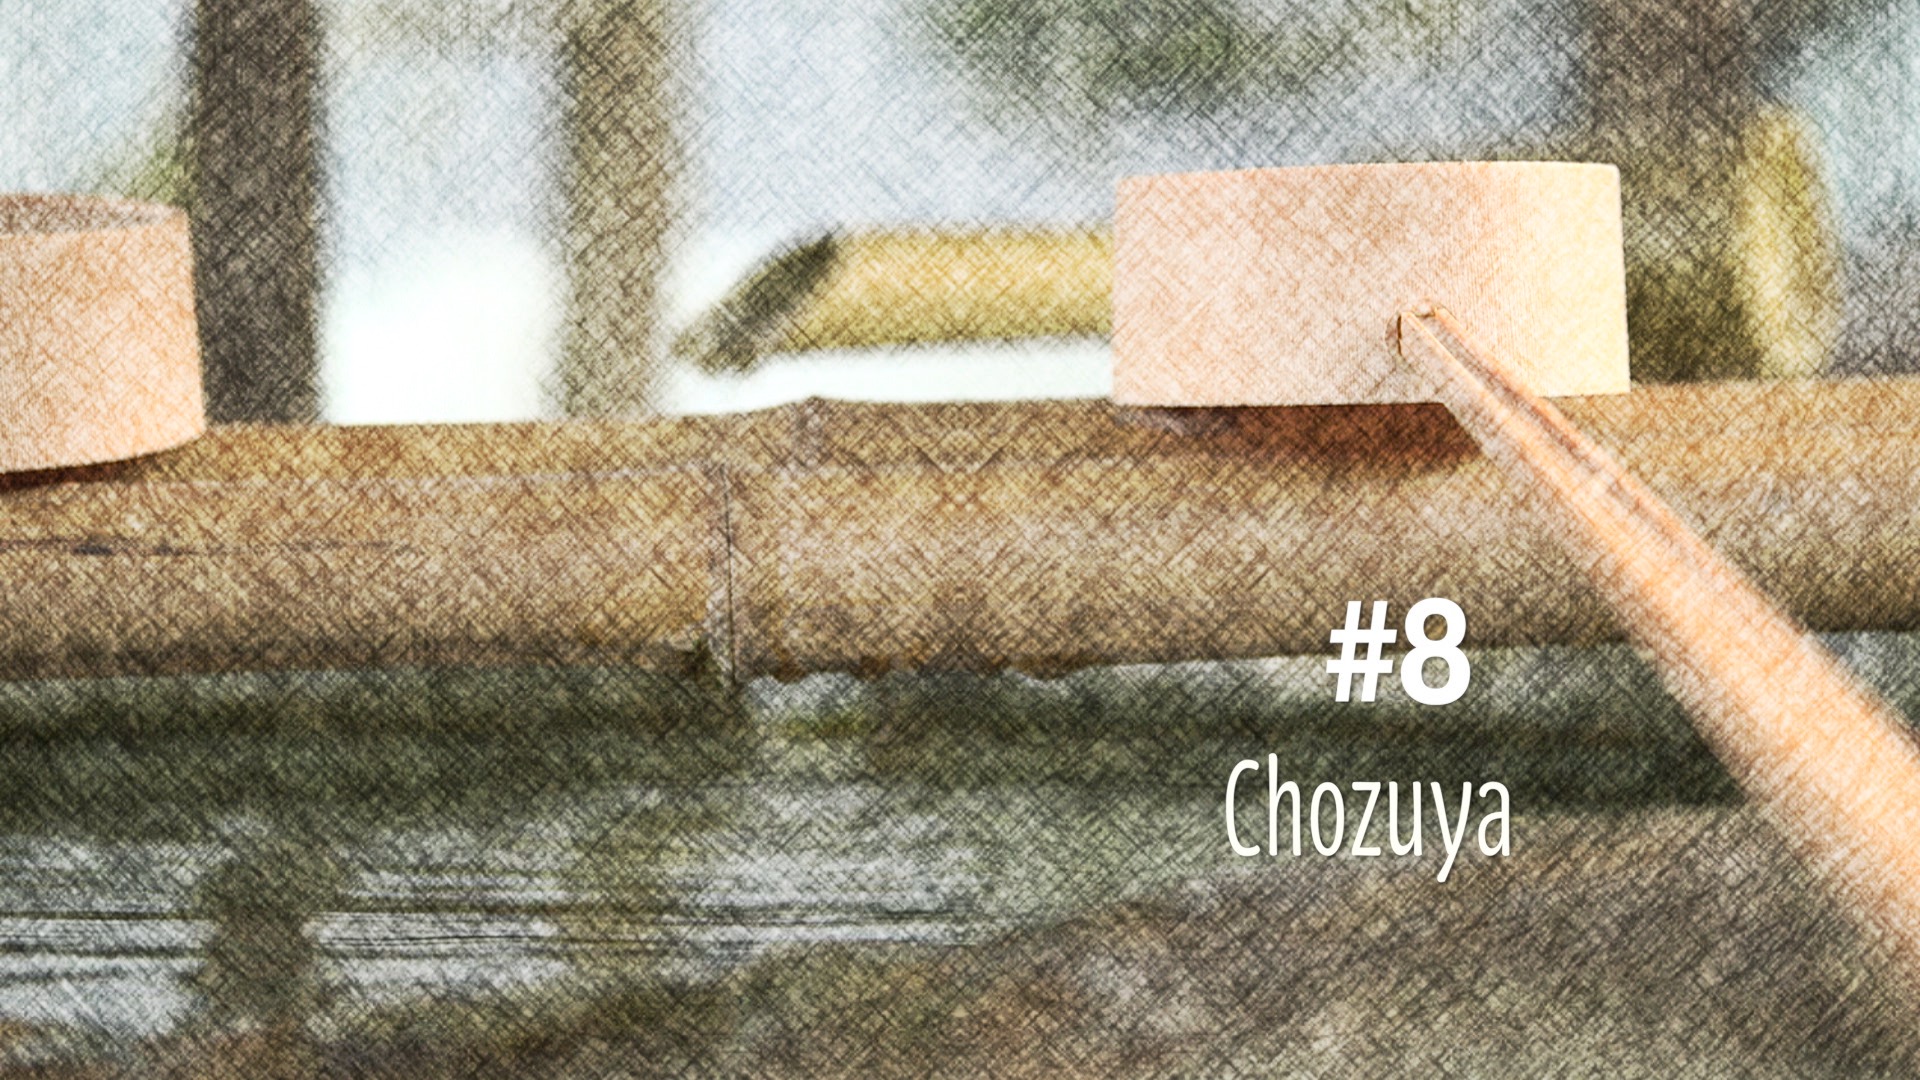 Le Chozuya (#8)